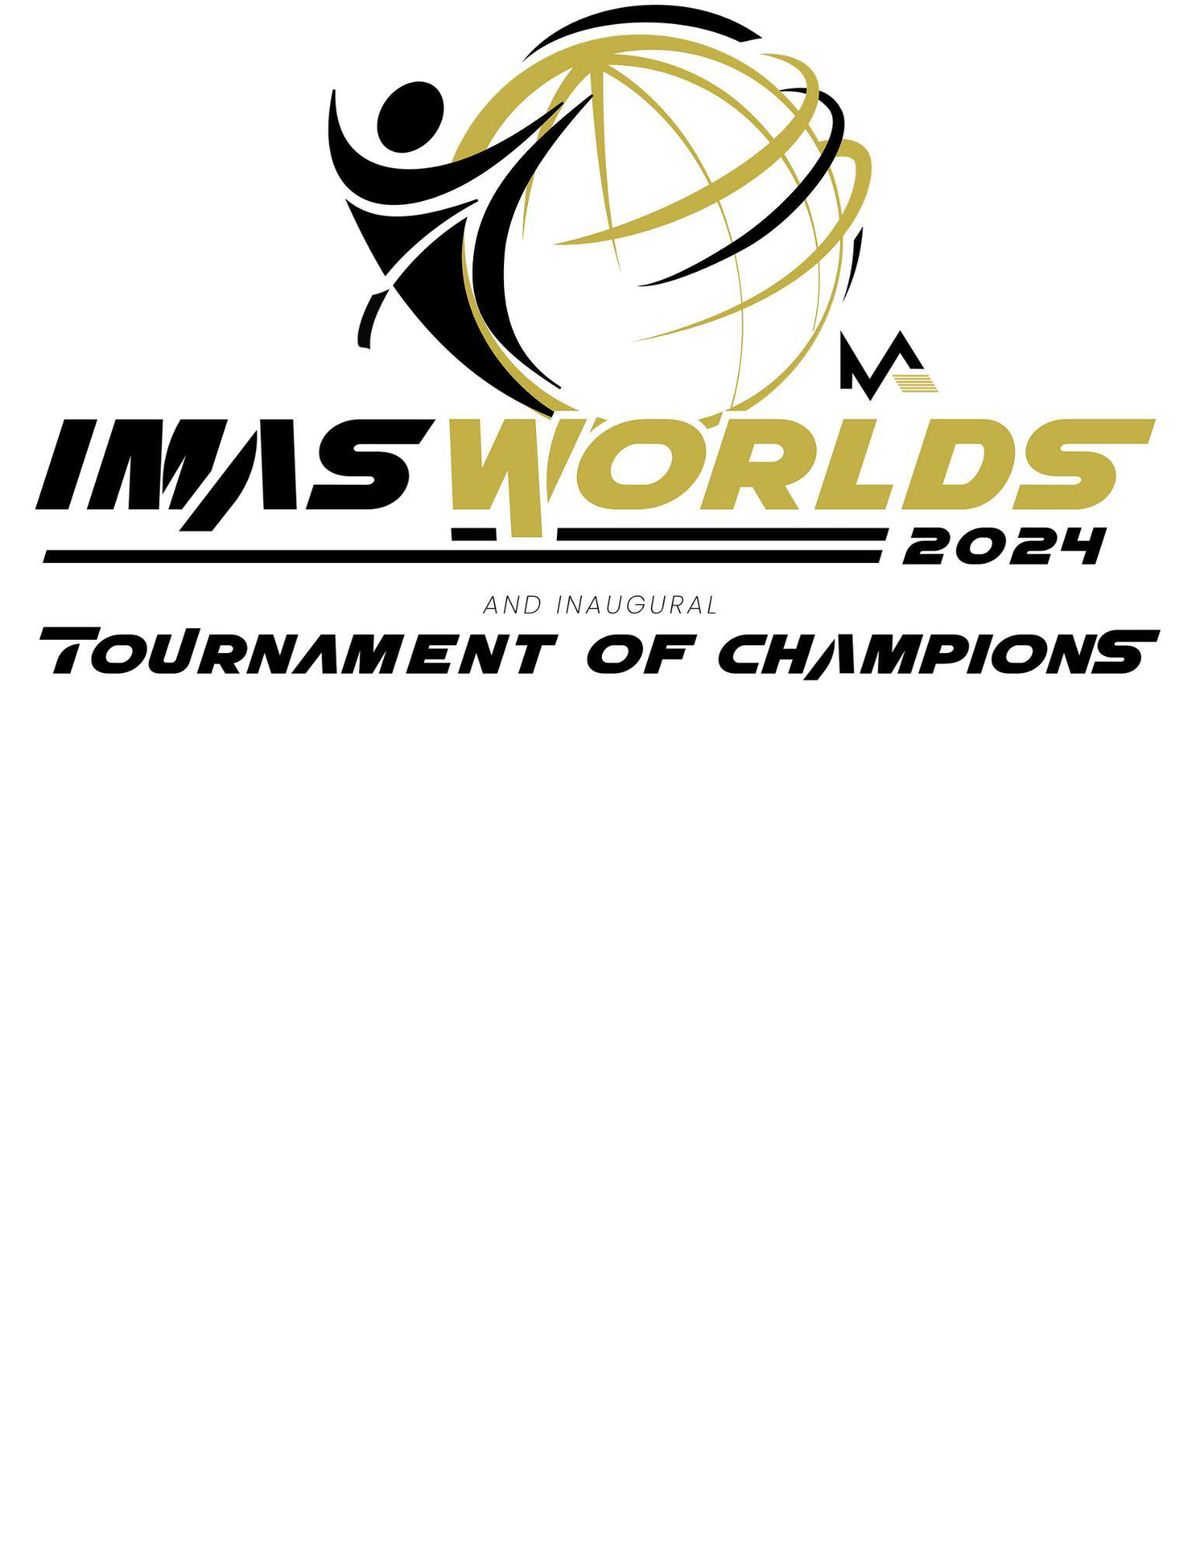 Tournament of Champions and World Tournament